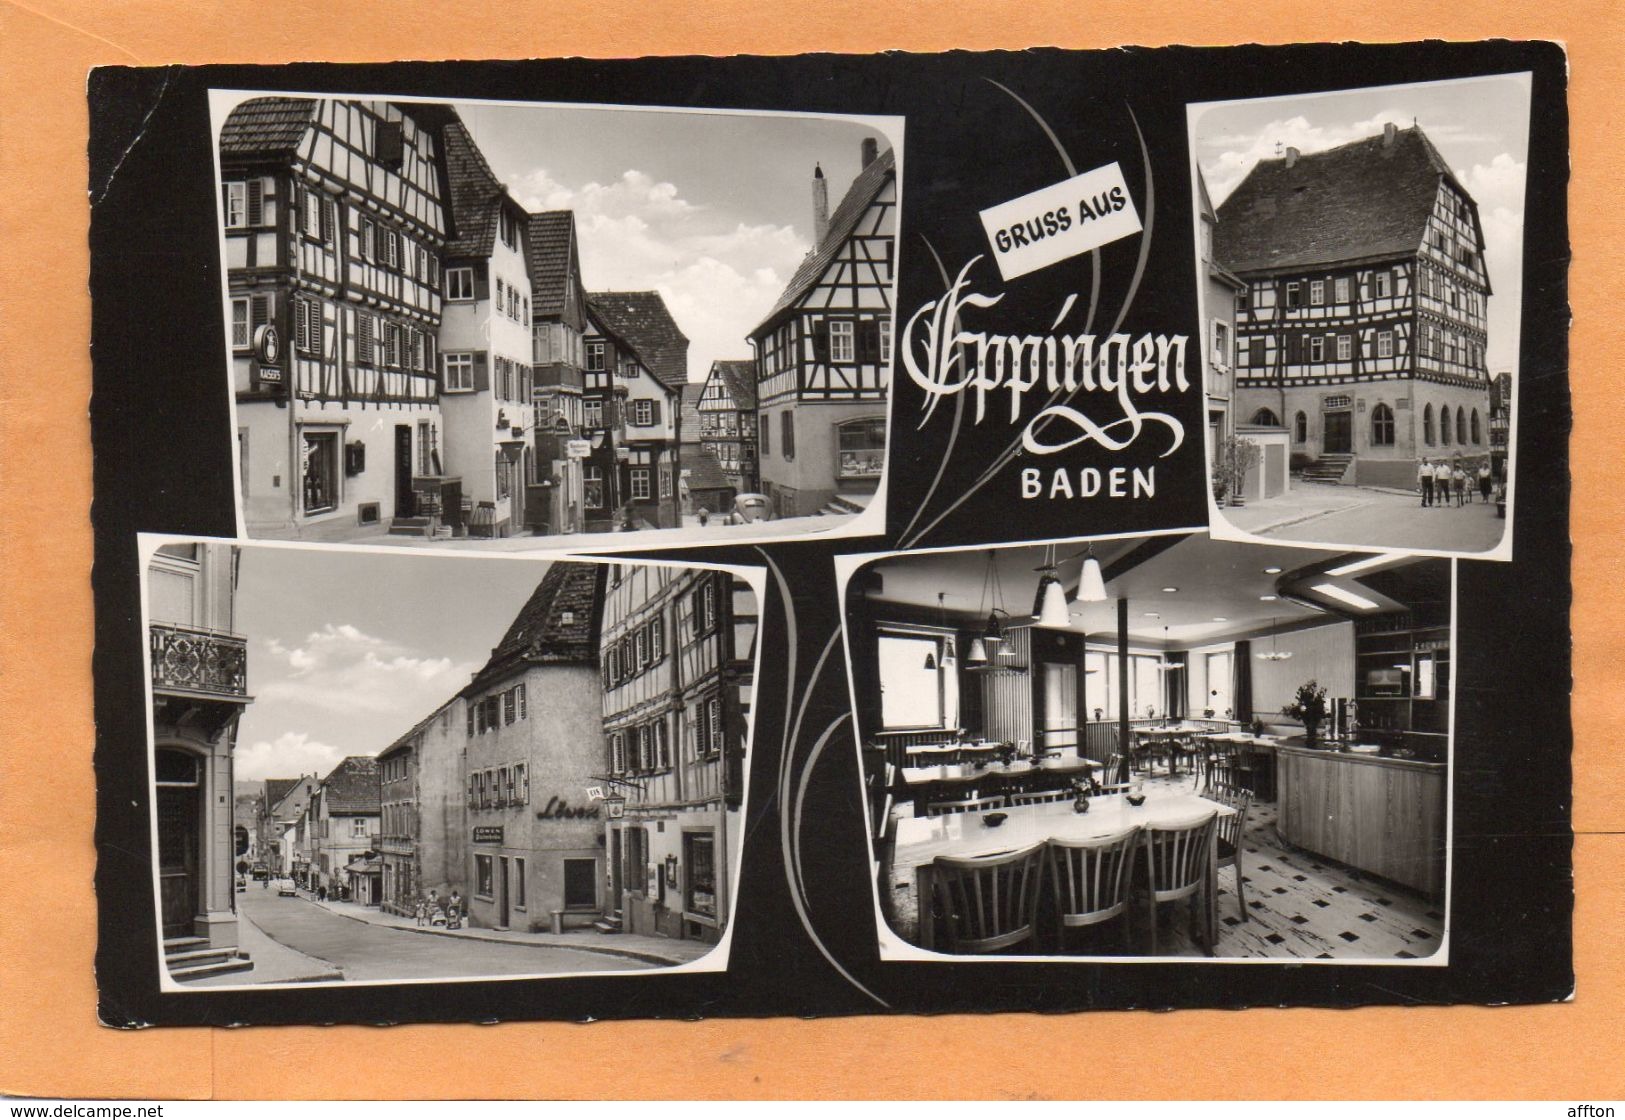 Eppingen Baden Germany 1950 Postcard - Eppingen